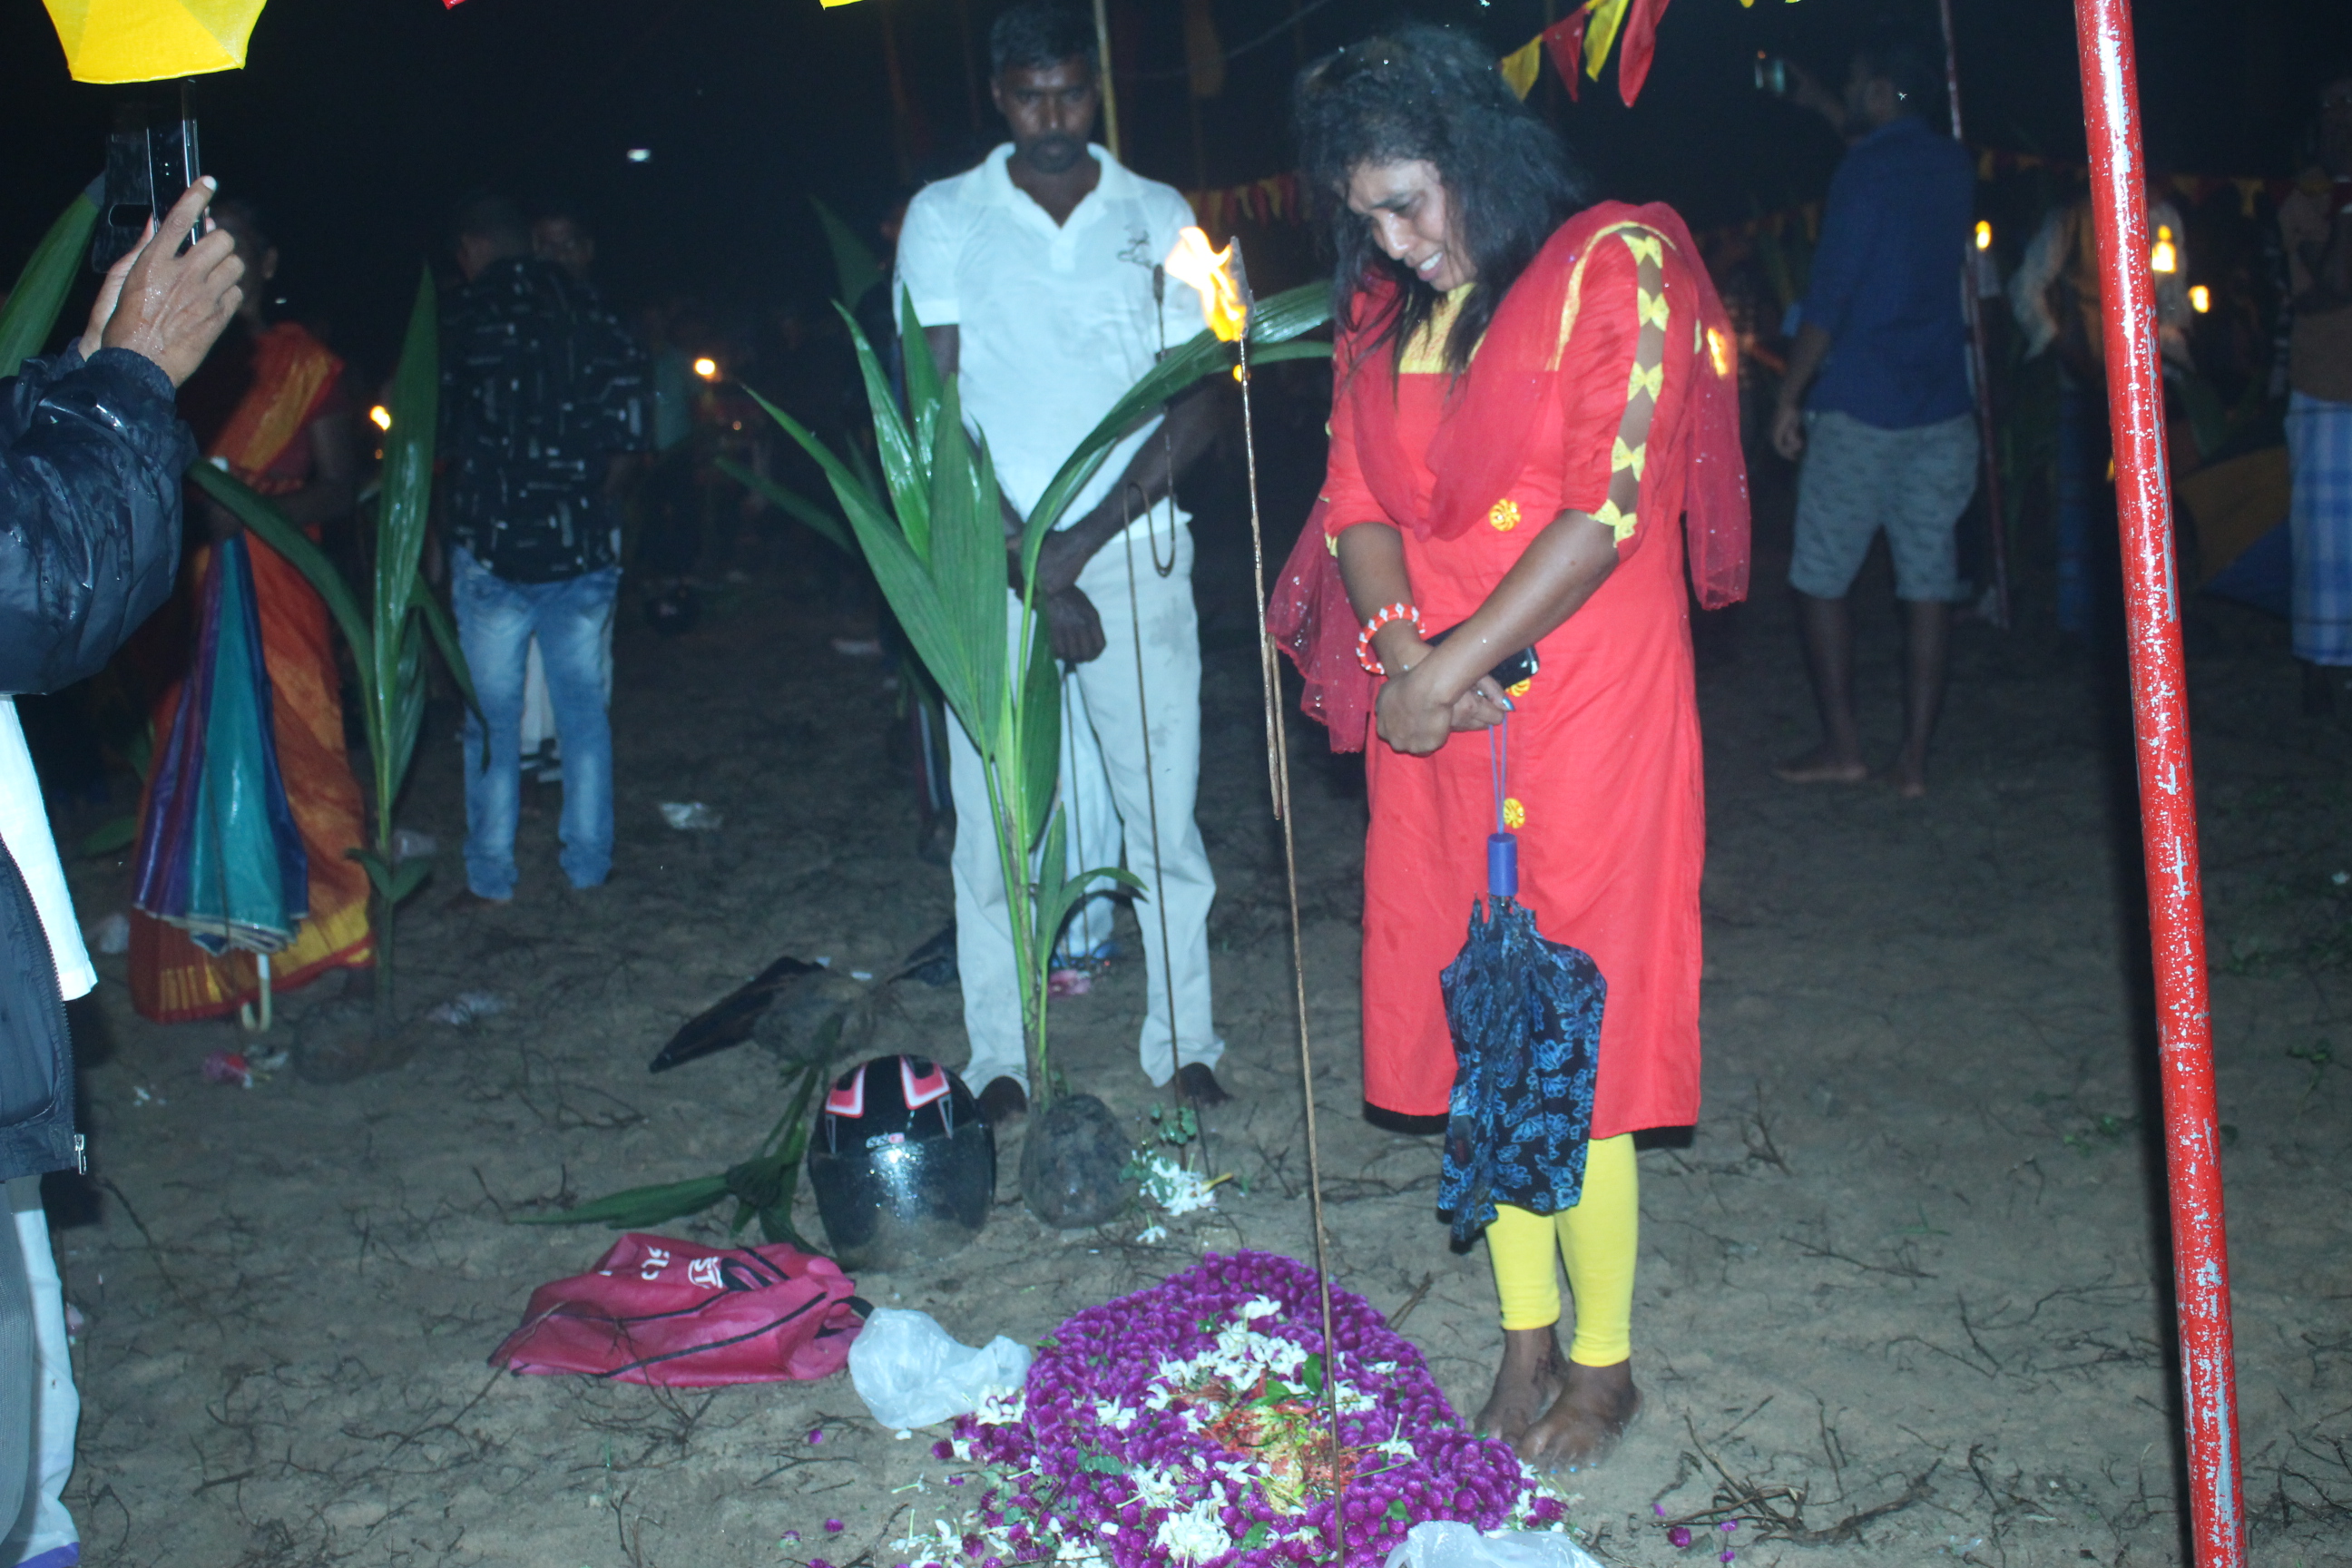 Batti Munmari 3 மாவடிமுன்மாரியில் கொட்டும் மழையிலும் மாவீரர் தின நிகழ்வுகள் சிறப்பாக நடைபெற்றன